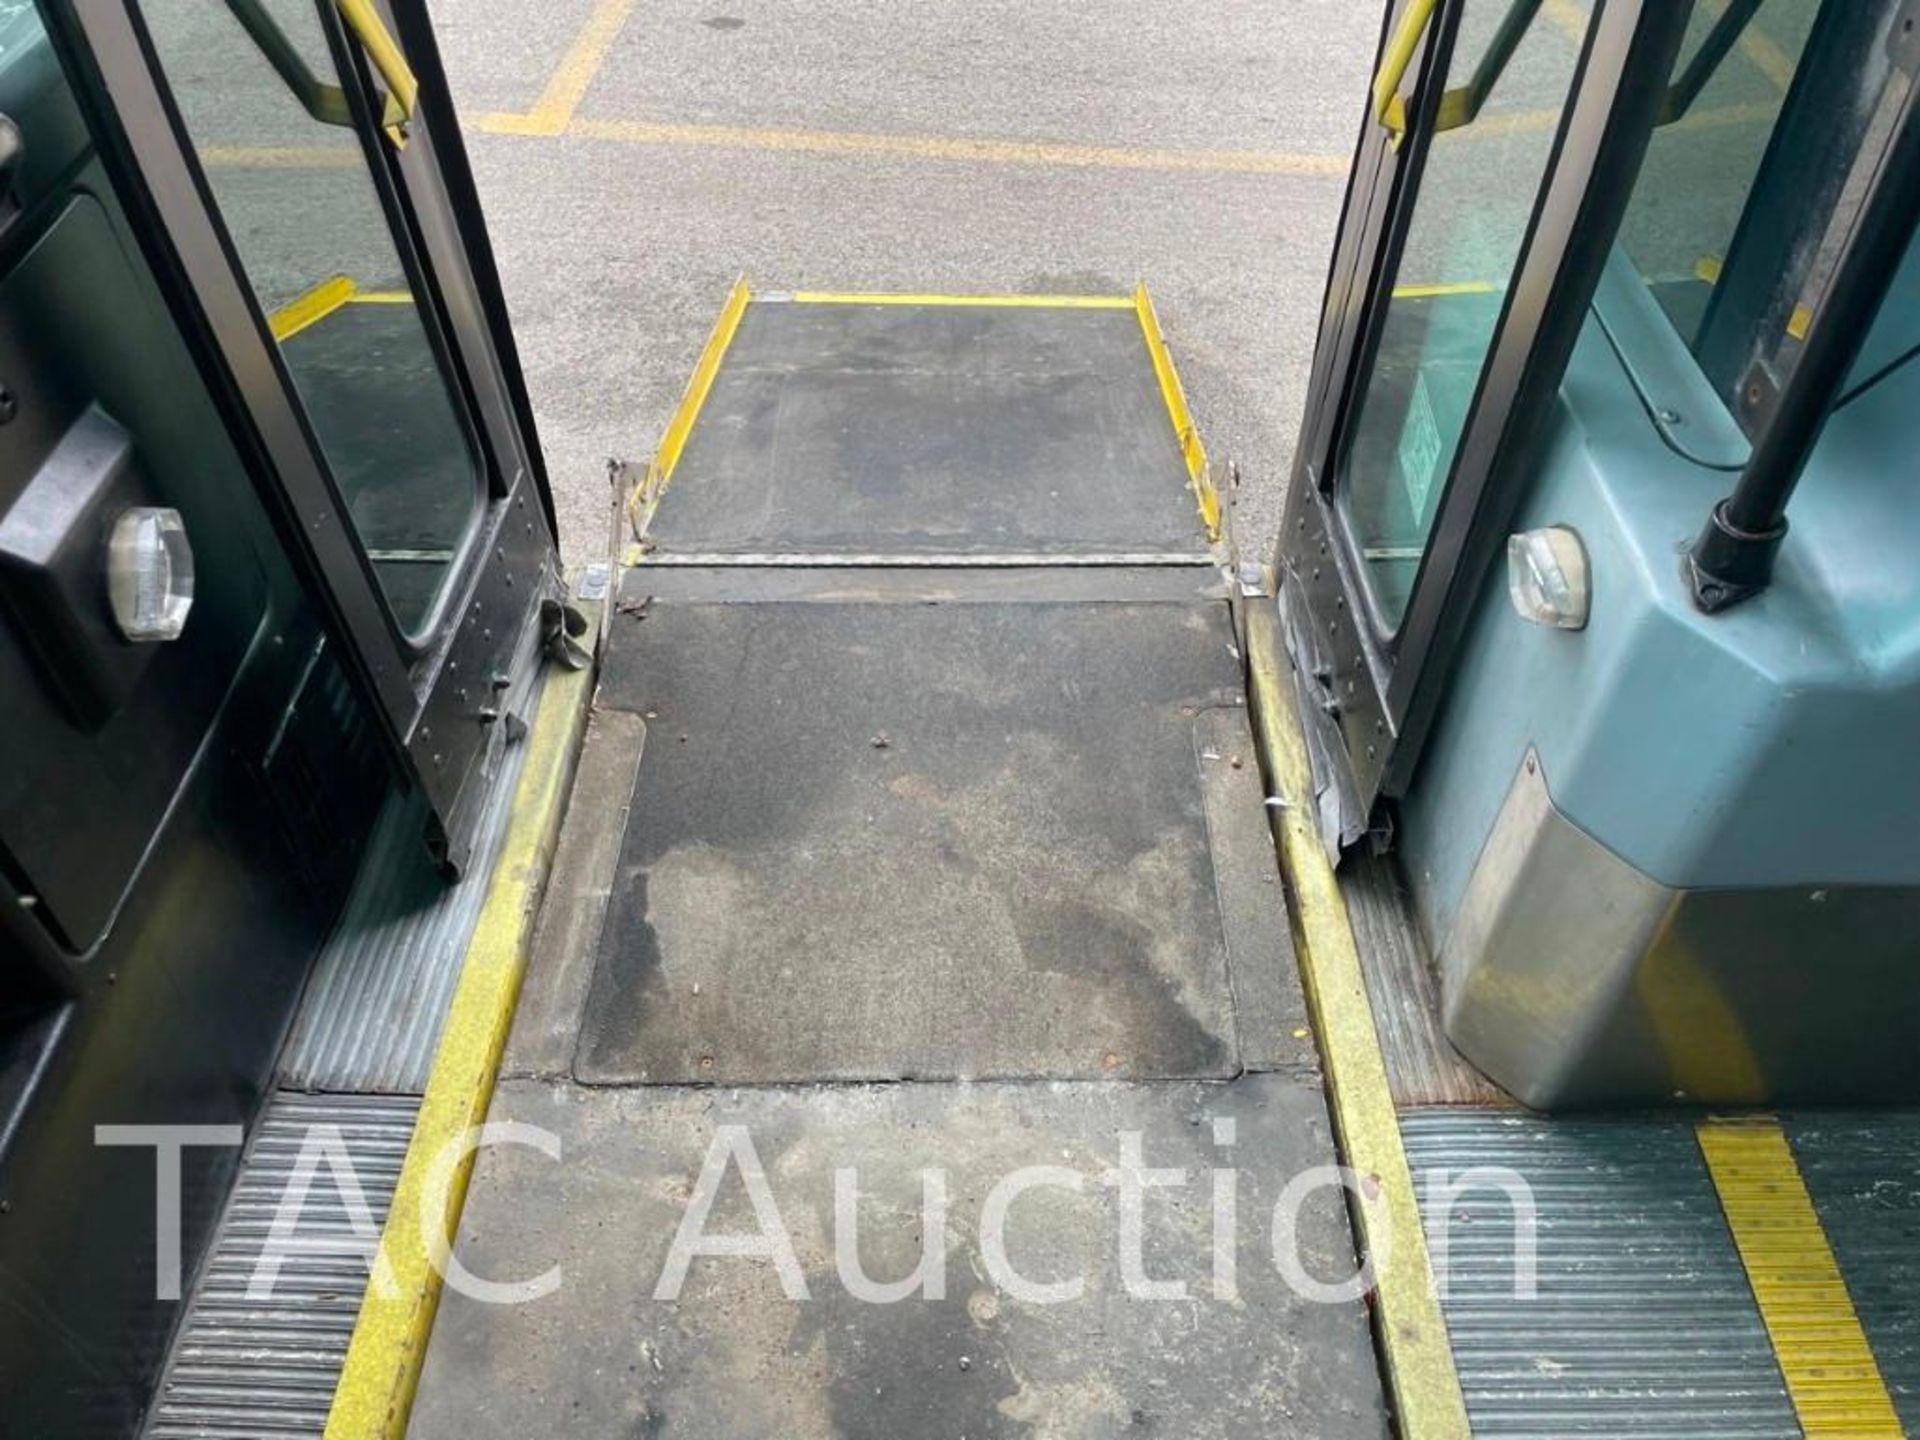 2005 Gillig Low Floor (40) Passenger Coach Transit Bus - Image 30 of 91